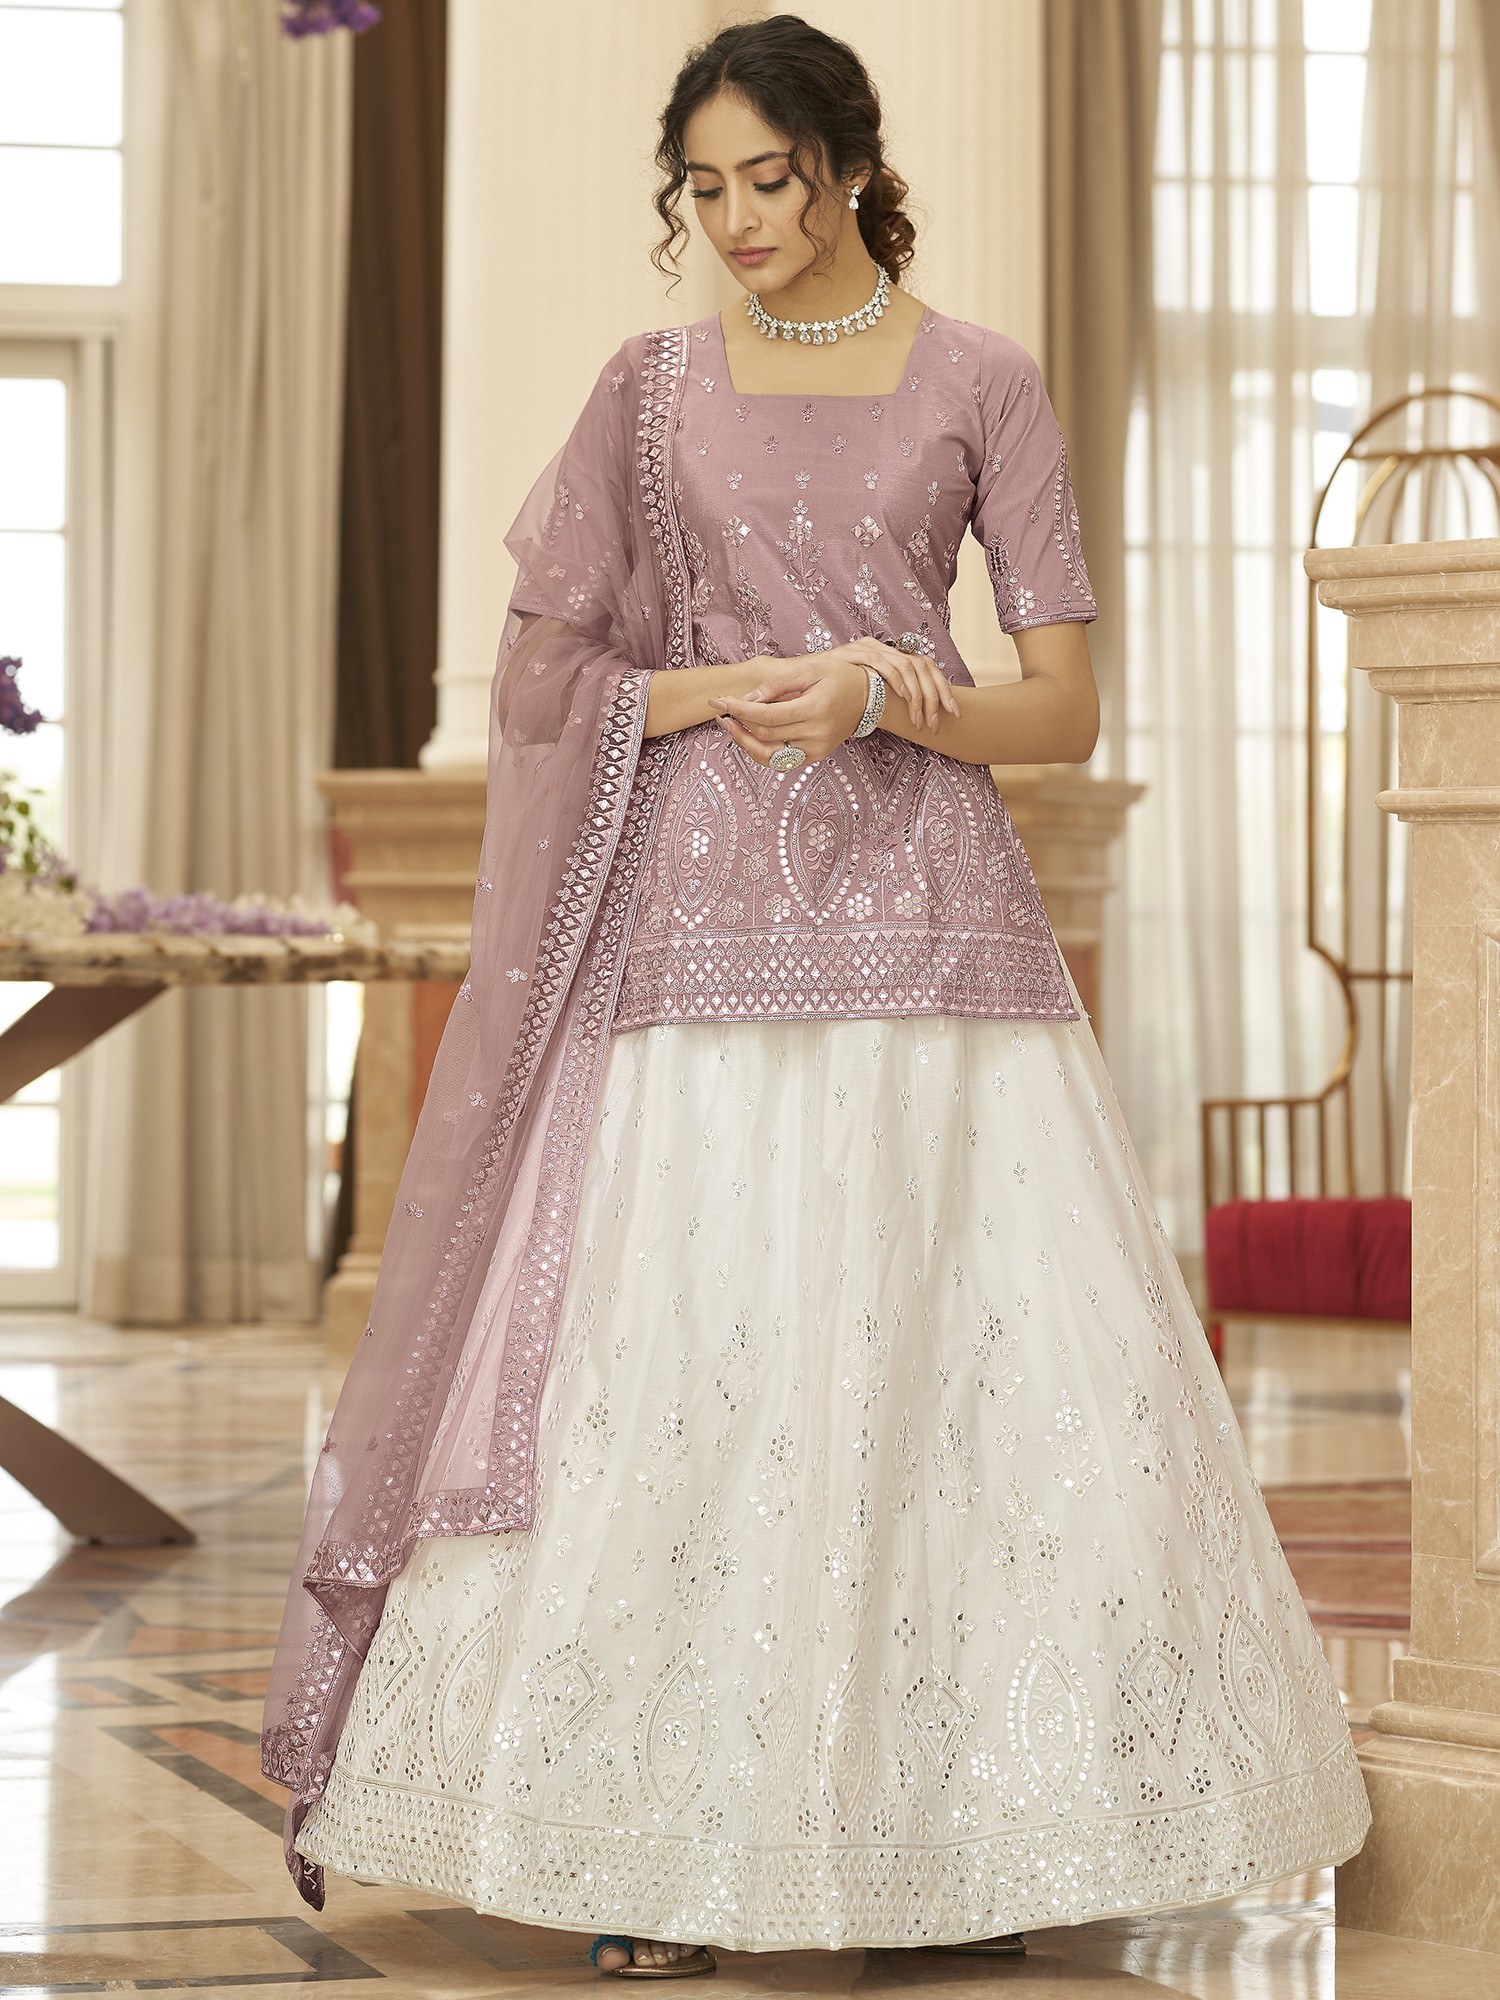 Breathtaking Lehengas in Hyderabad for Modern Bridal looks - Taruni Blog -  Buy Kurtis online - Designer Kurtis for Women & Girls, Ethnic Indian Kurtis